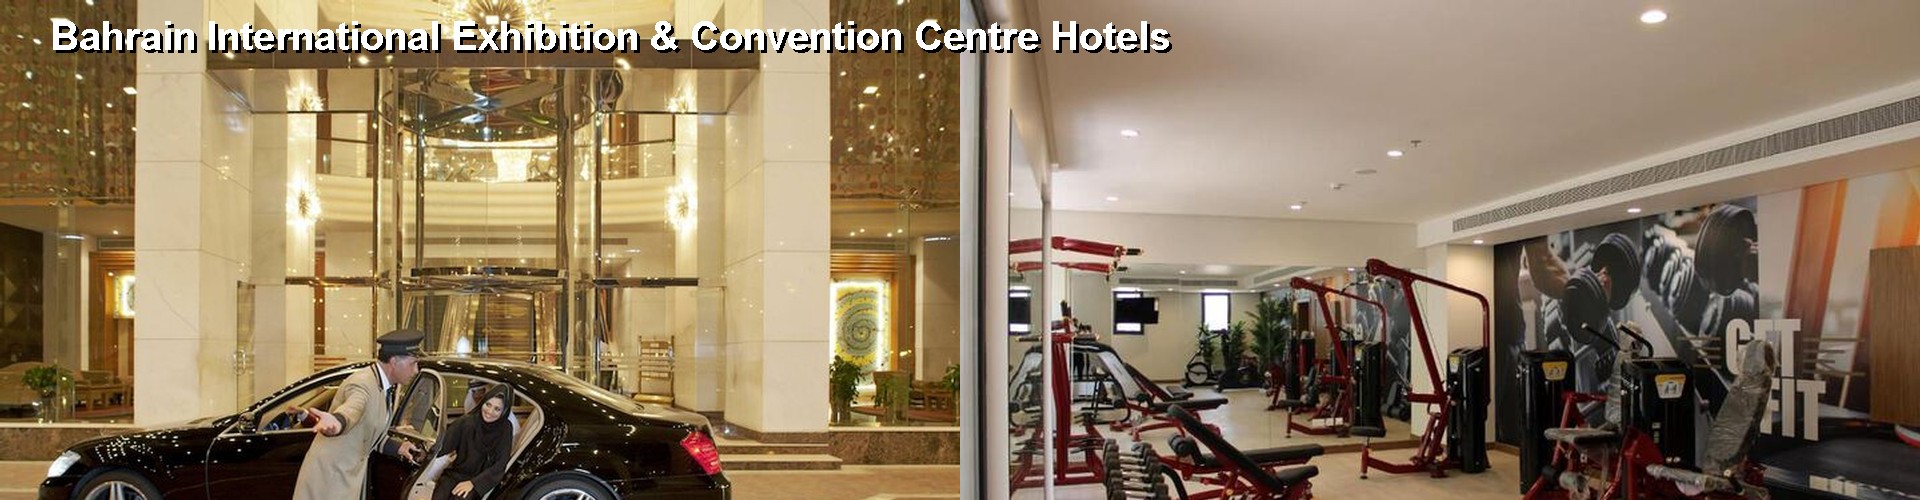 5 Best Hotels near Bahrain International Exhibition & Convention Centre